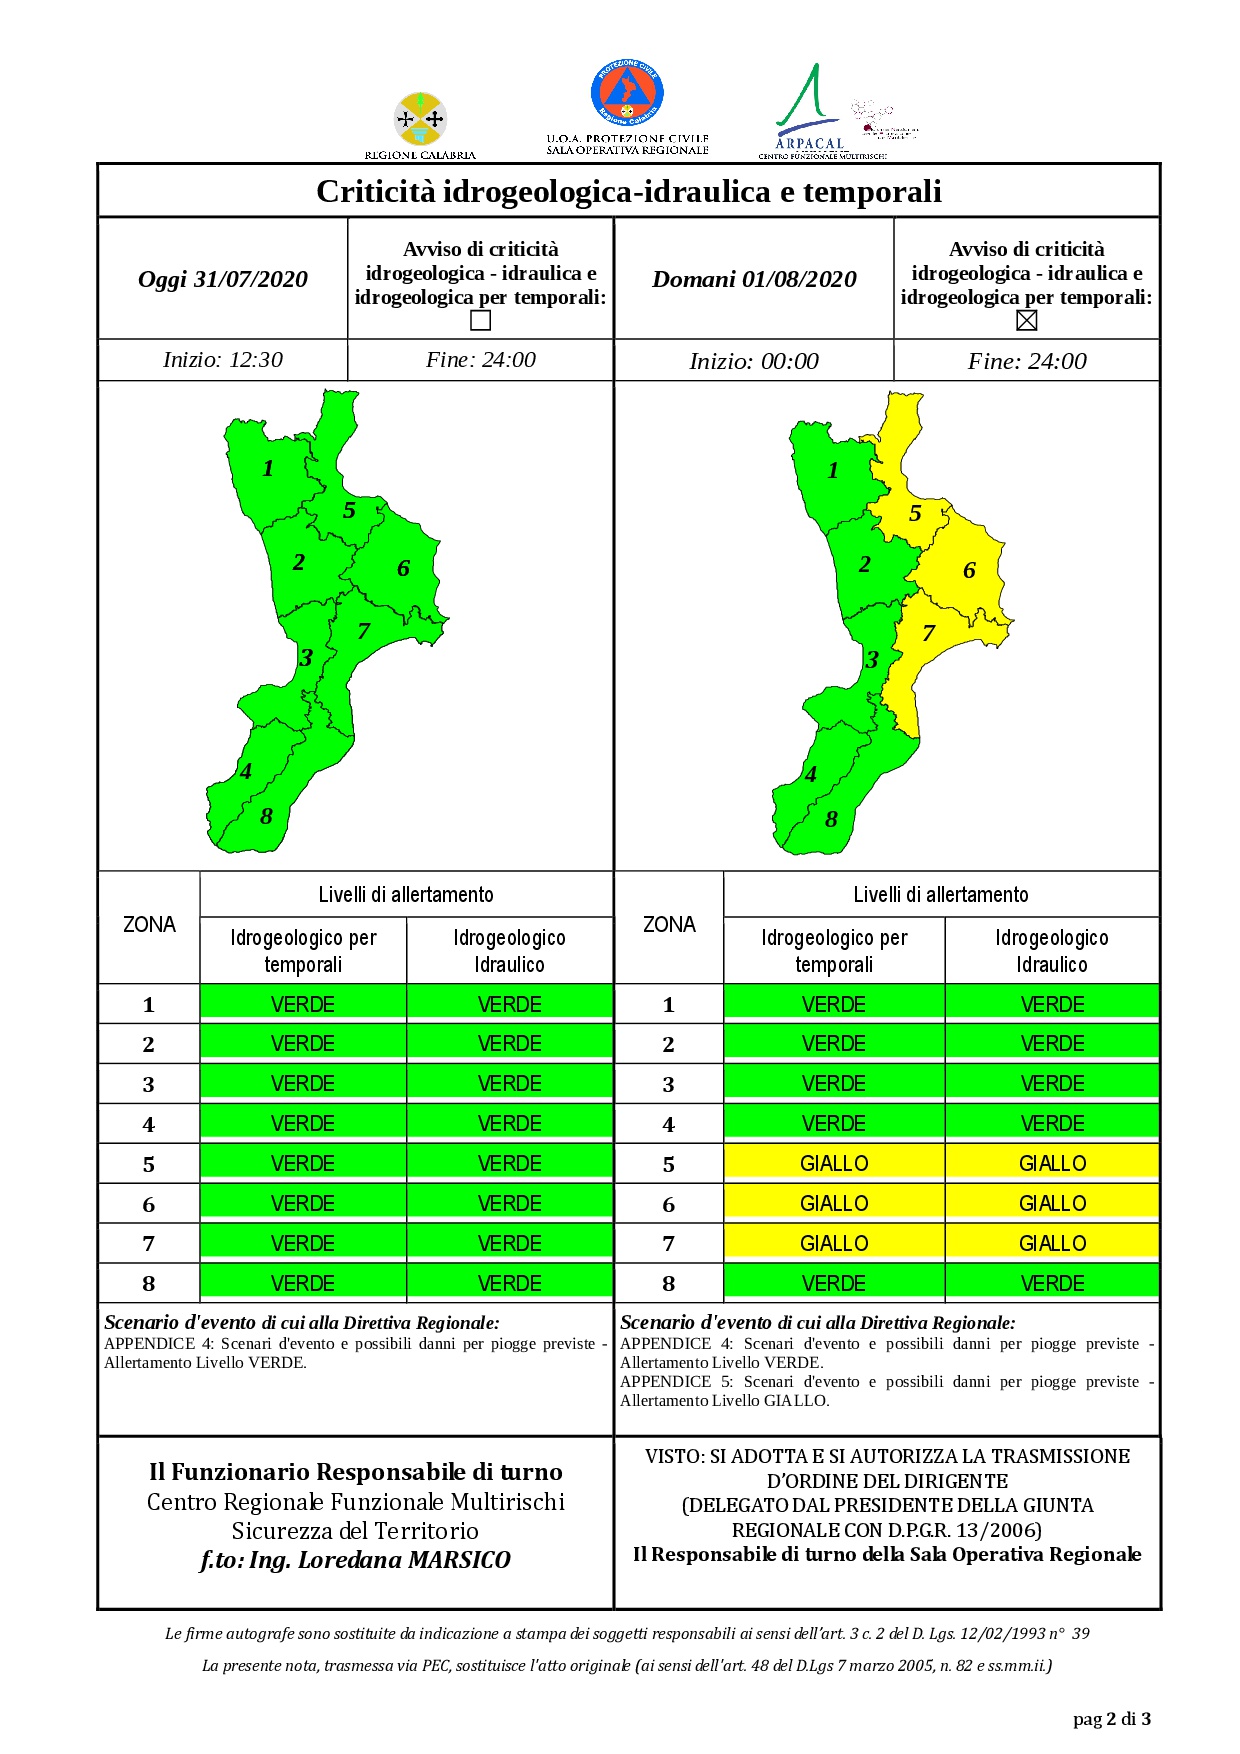 Criticità idrogeologica-idraulica e temporali in Calabria 31-07-2020